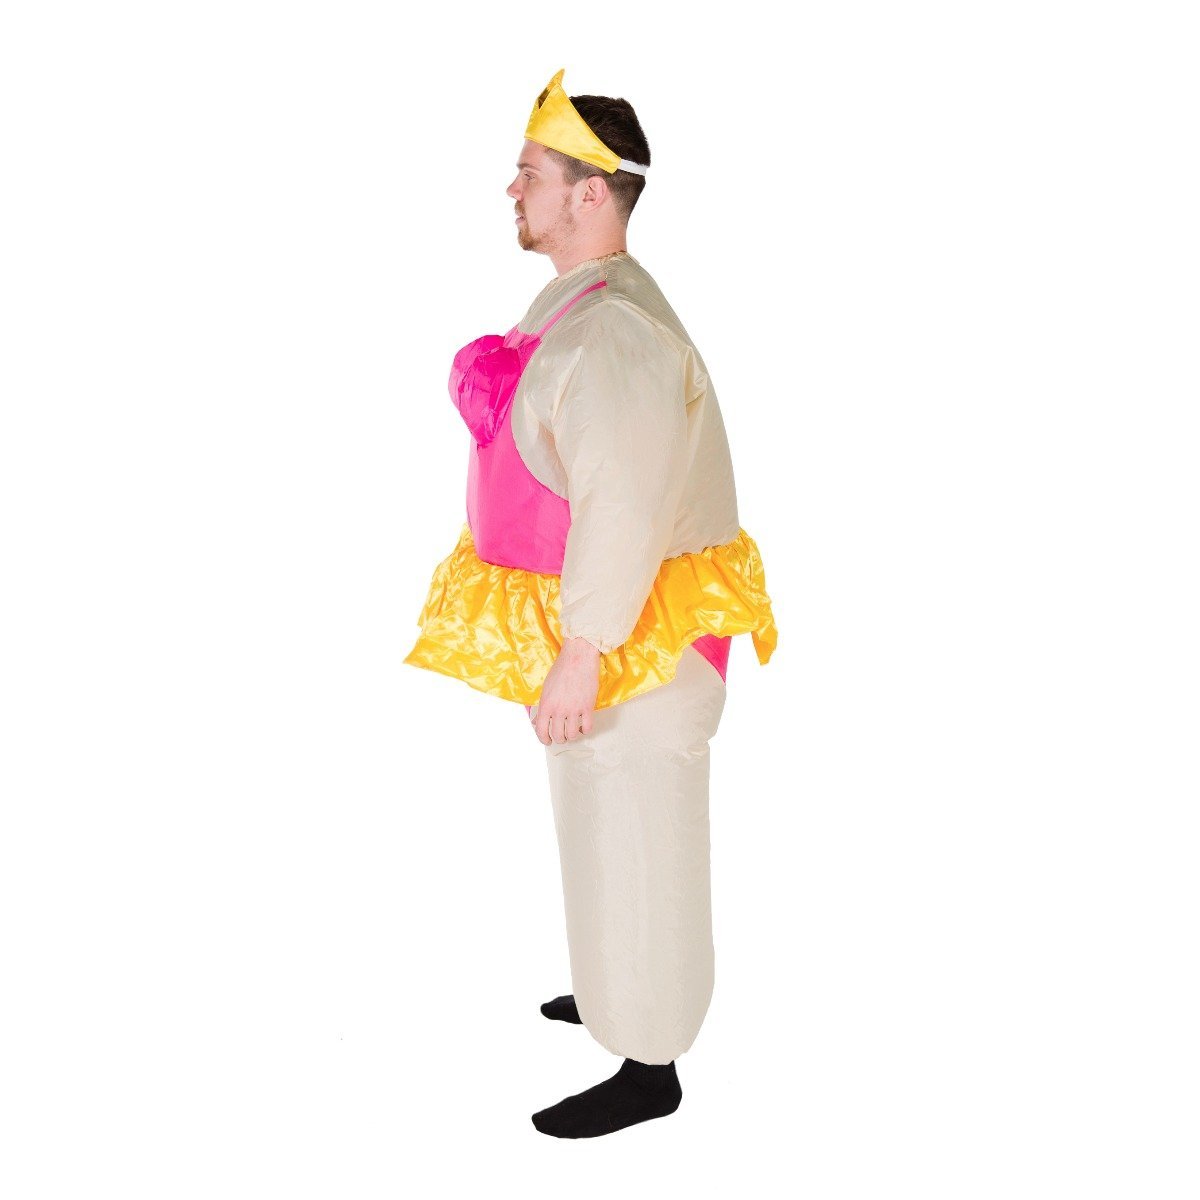 Bodysocks - Inflatable Ballerina Costume